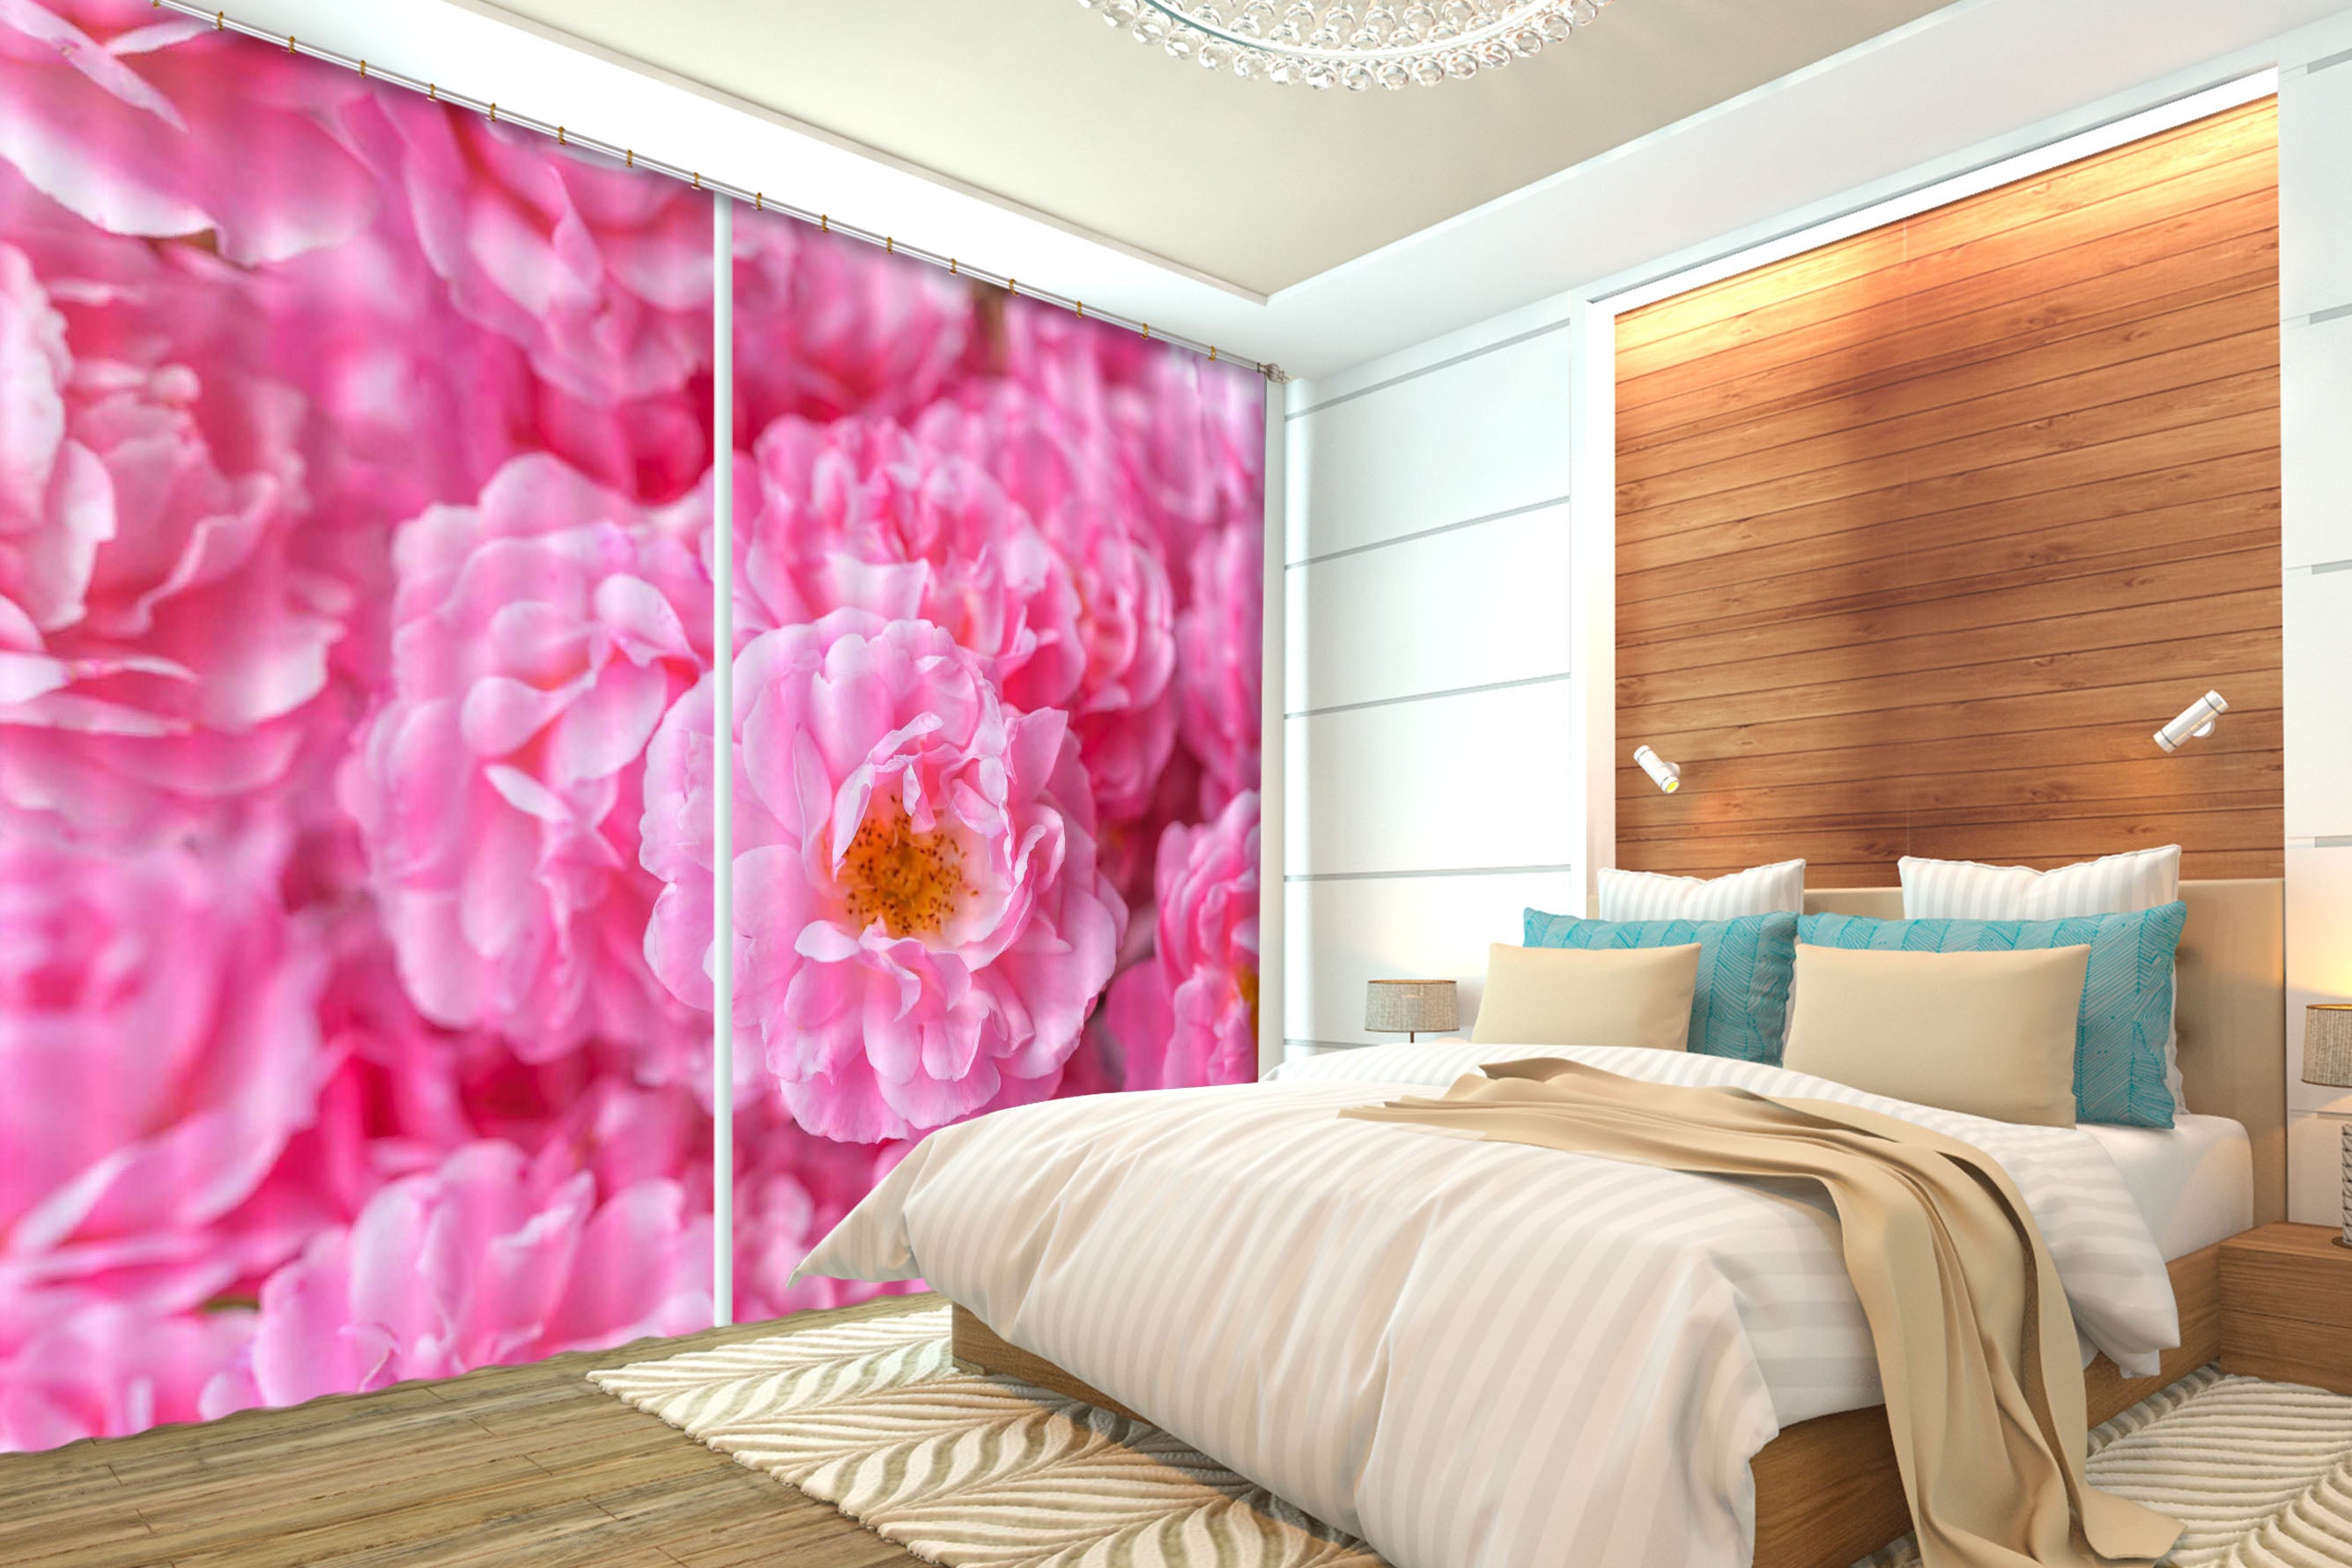 3D Pink Stamens 6350 Assaf Frank Curtain Curtains Drapes